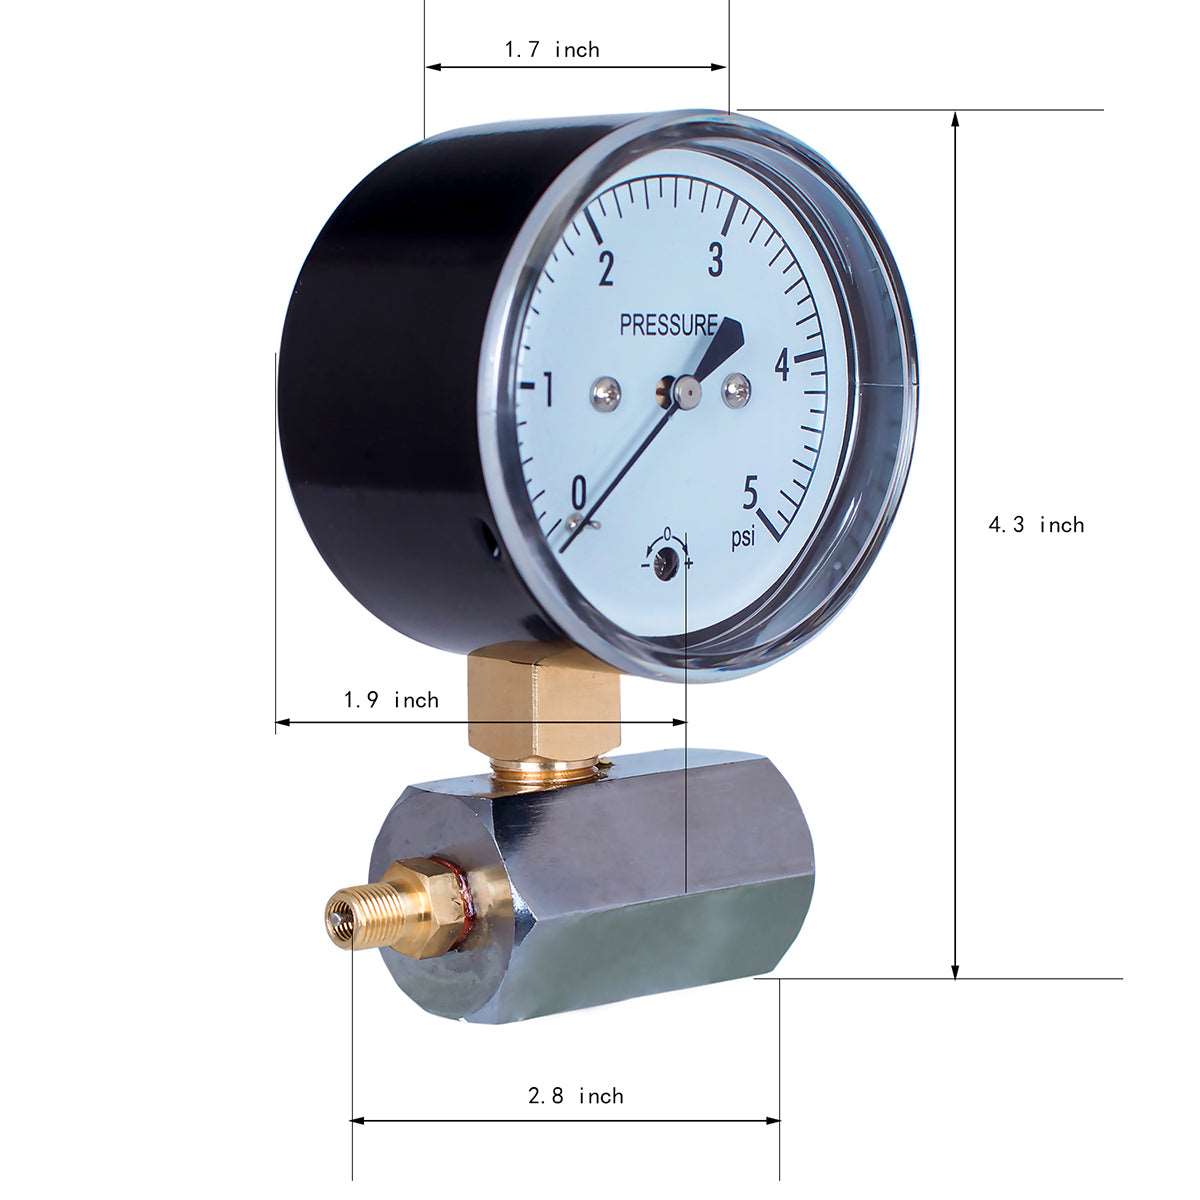 Low Capsule Pressure Gauge, 2-1/2" Dial, 1/4" NPT Brass Connection (Bottom Mount), Zero Adjustment, Safety Glass Window, Black Steel case - JIVTO